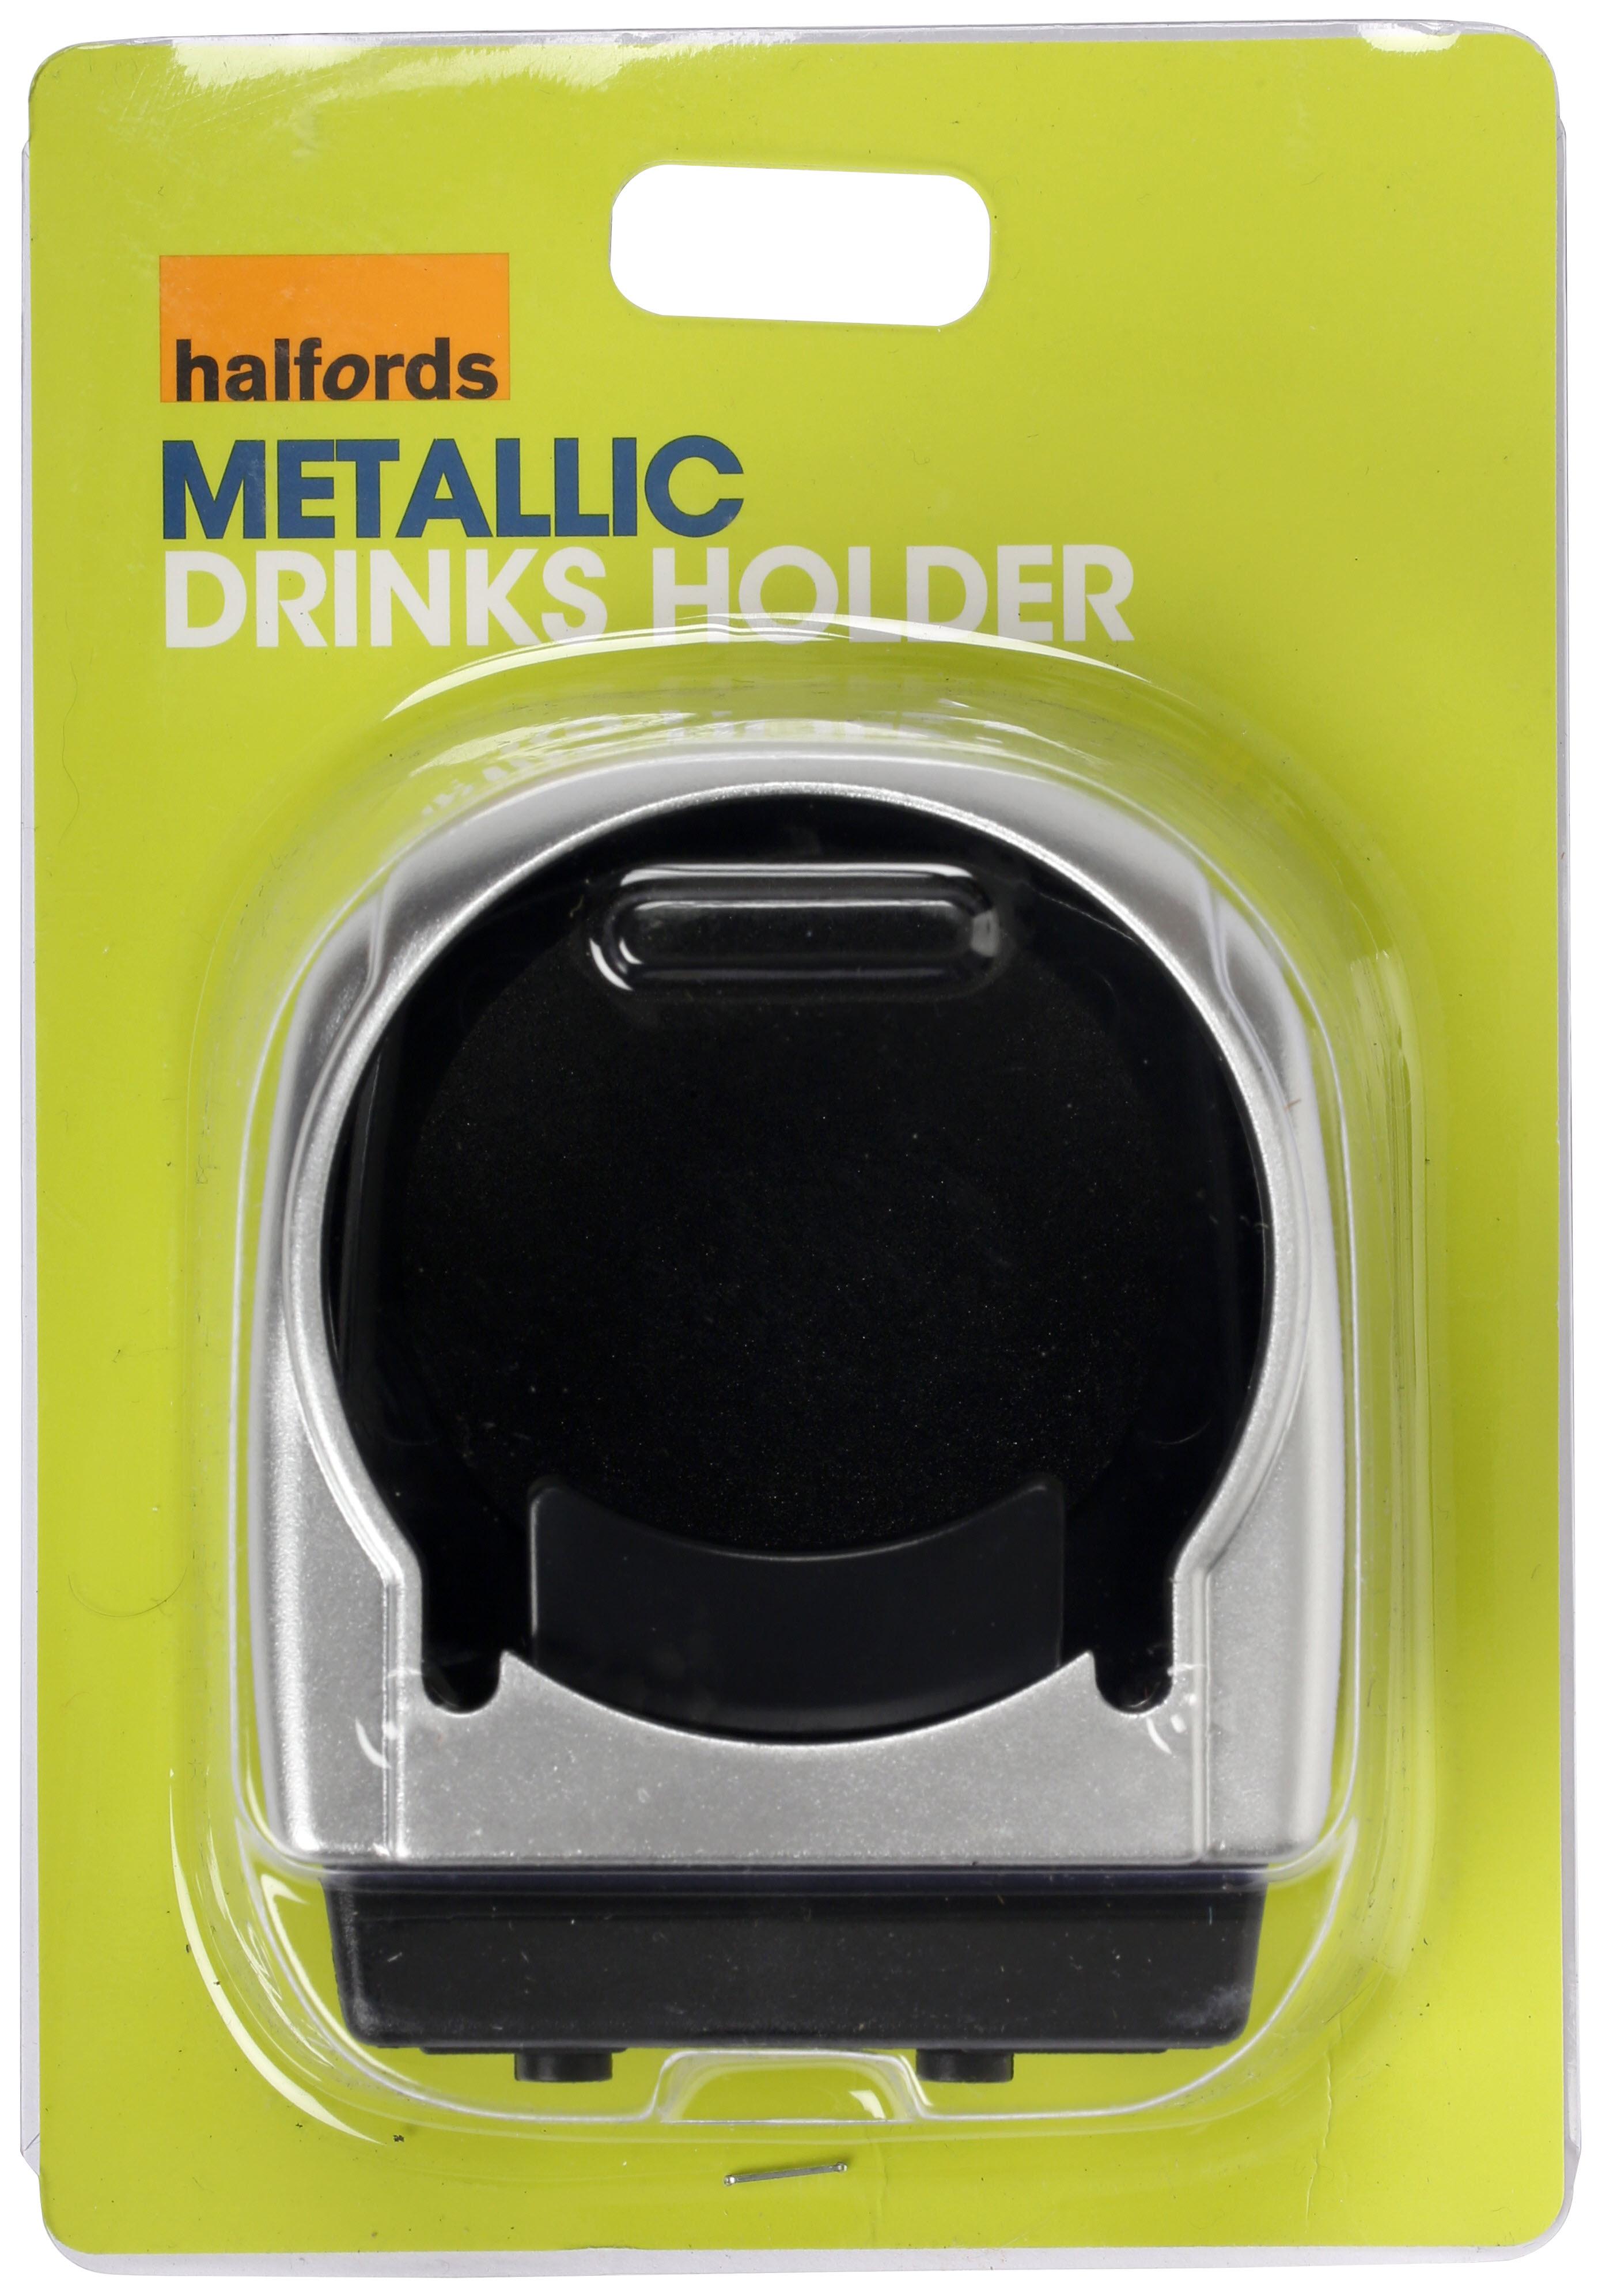 Halfords Metalic Drinks Holder